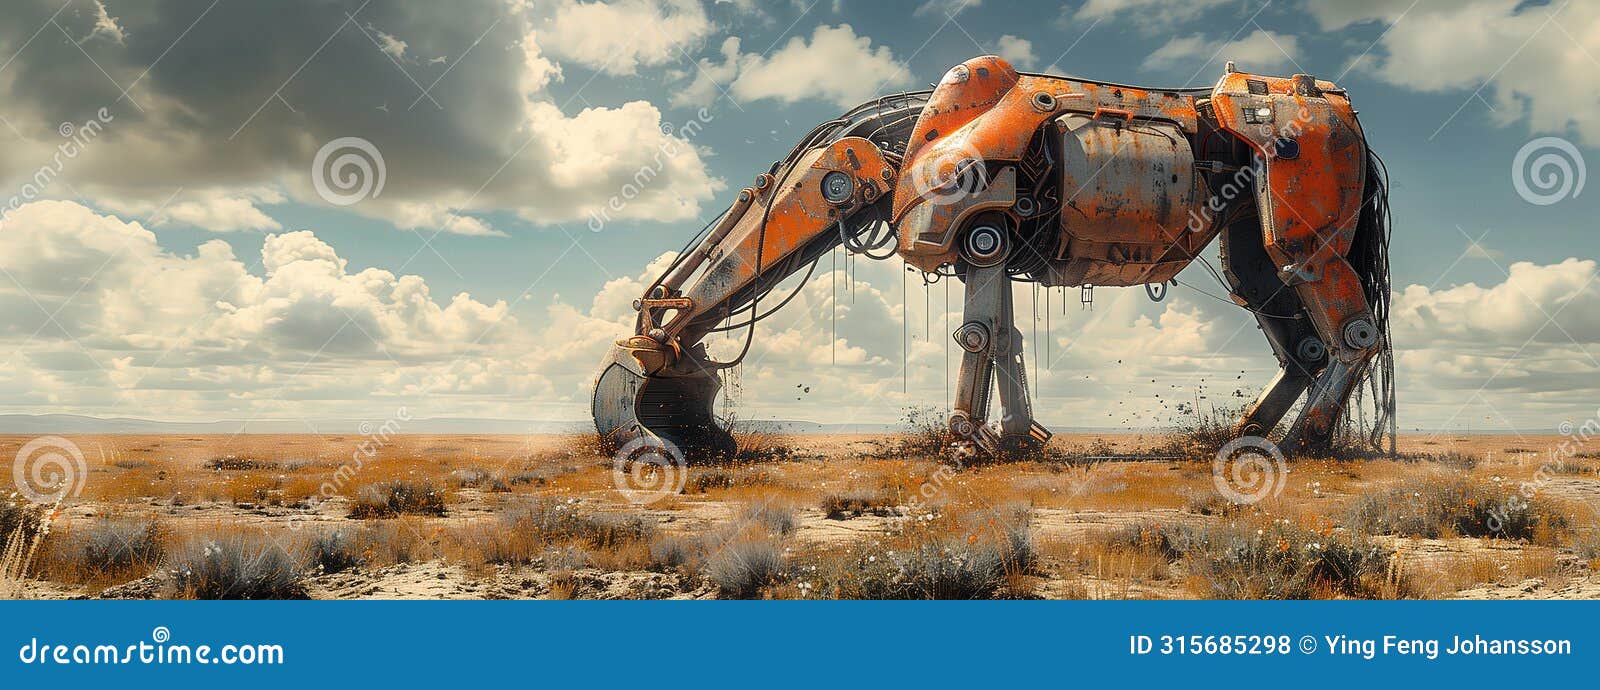 ingenious animal-inspired creation: a horse-like orange machine digging in field.